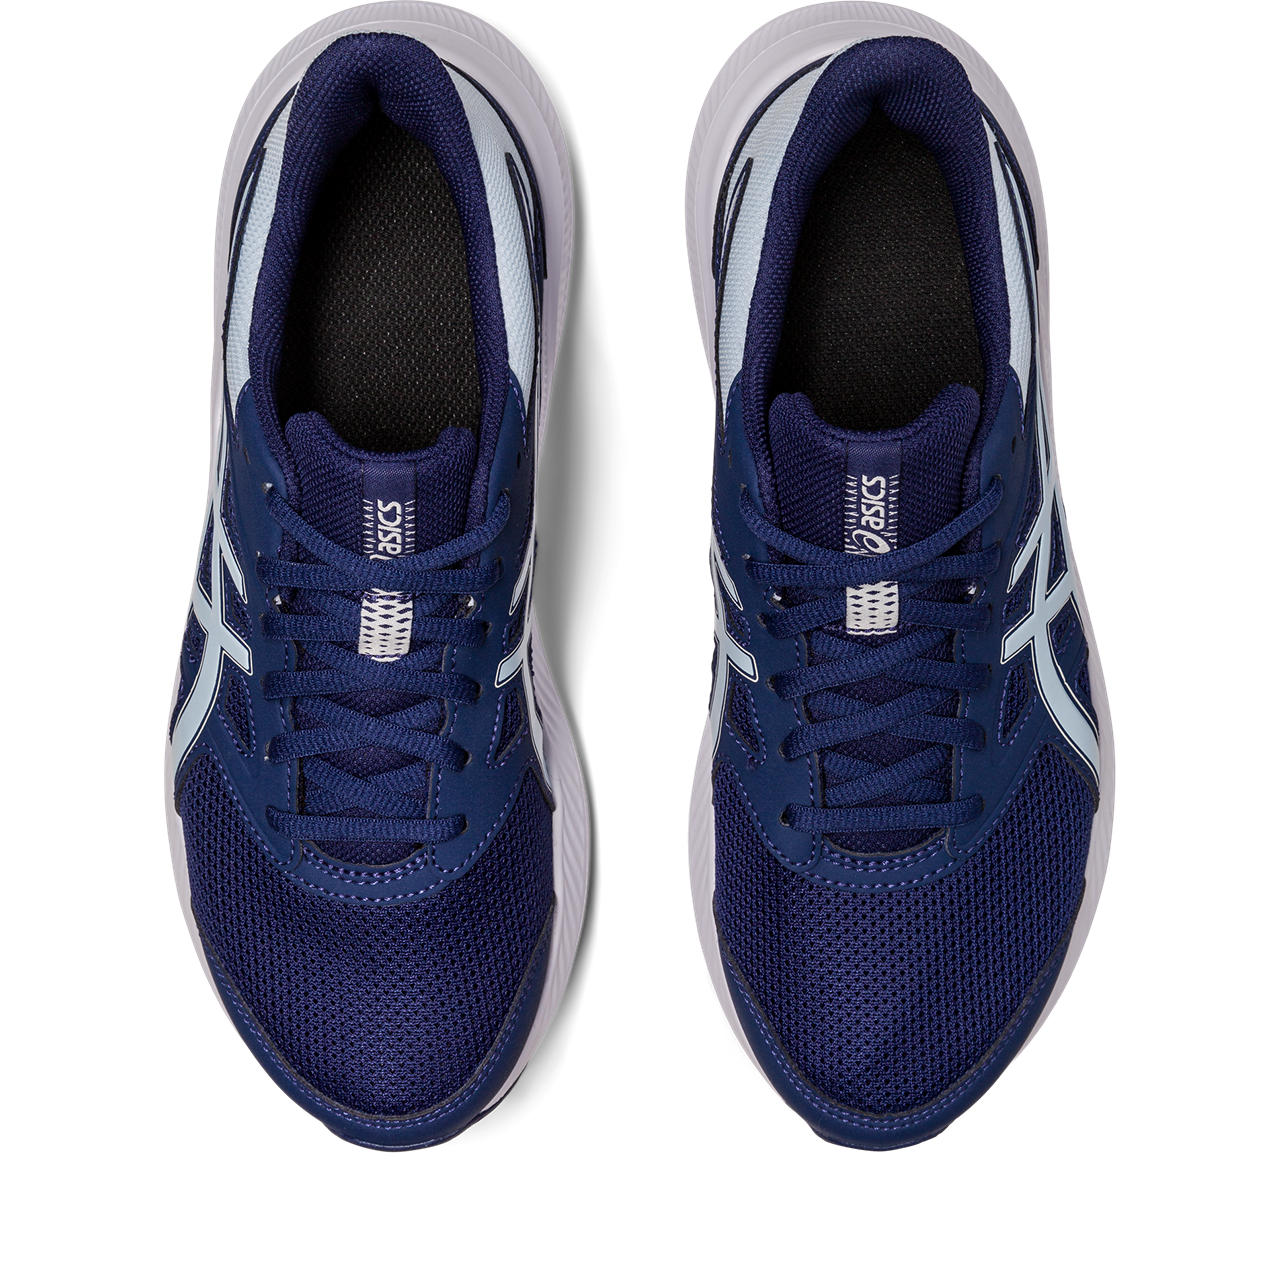  ASICS Men's NOVABLAST 3 LE Running Shoes, 7.5, Indigo  Blue/Island Blue